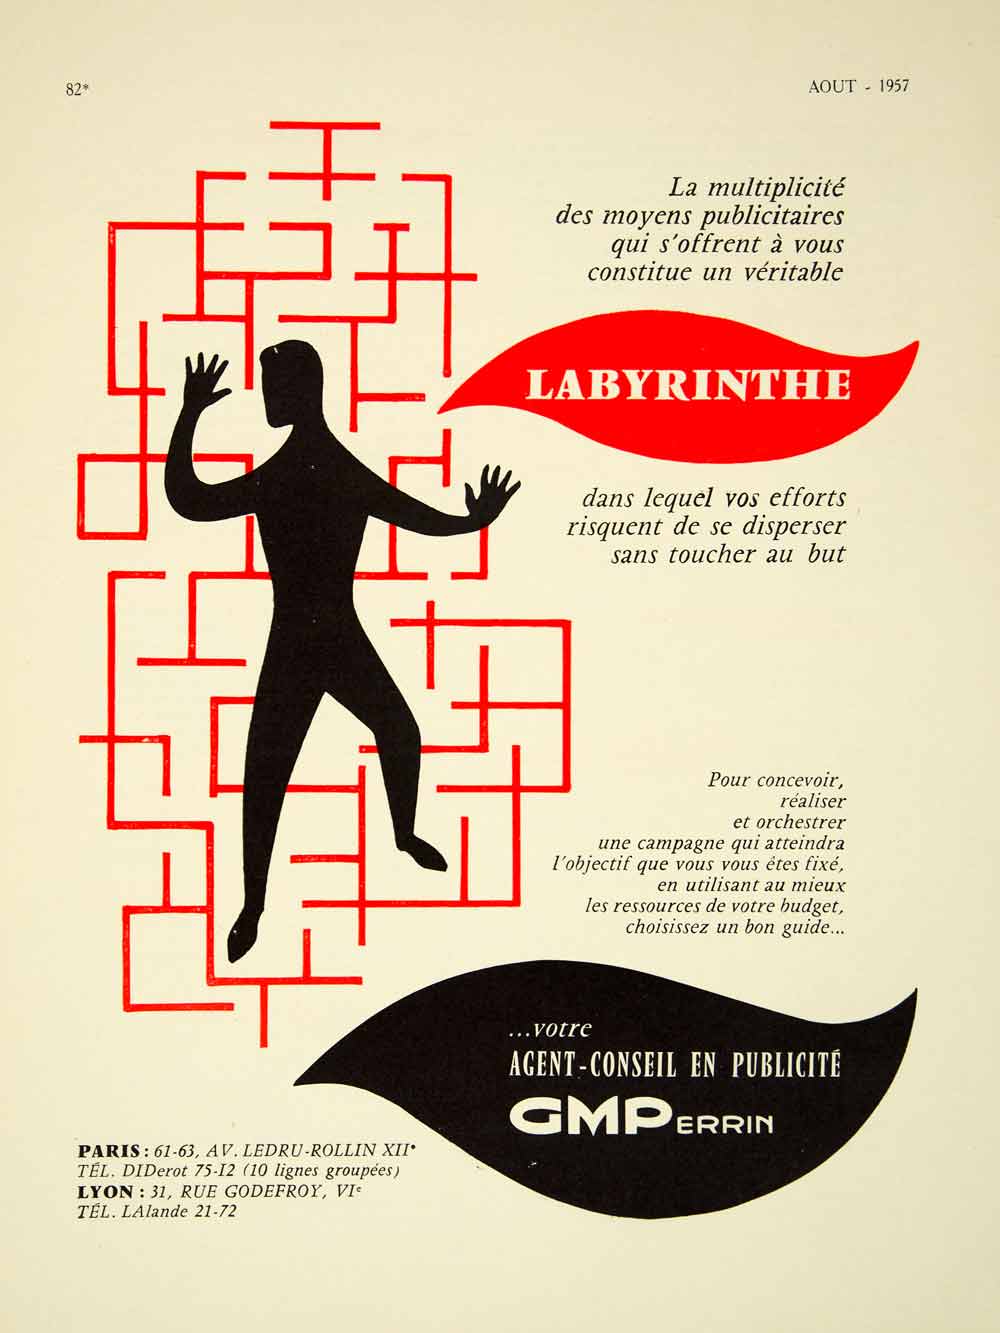 1957 Ad French Advertisement Labyrinth GMPerrin Paris Lyon Advertising VENA6